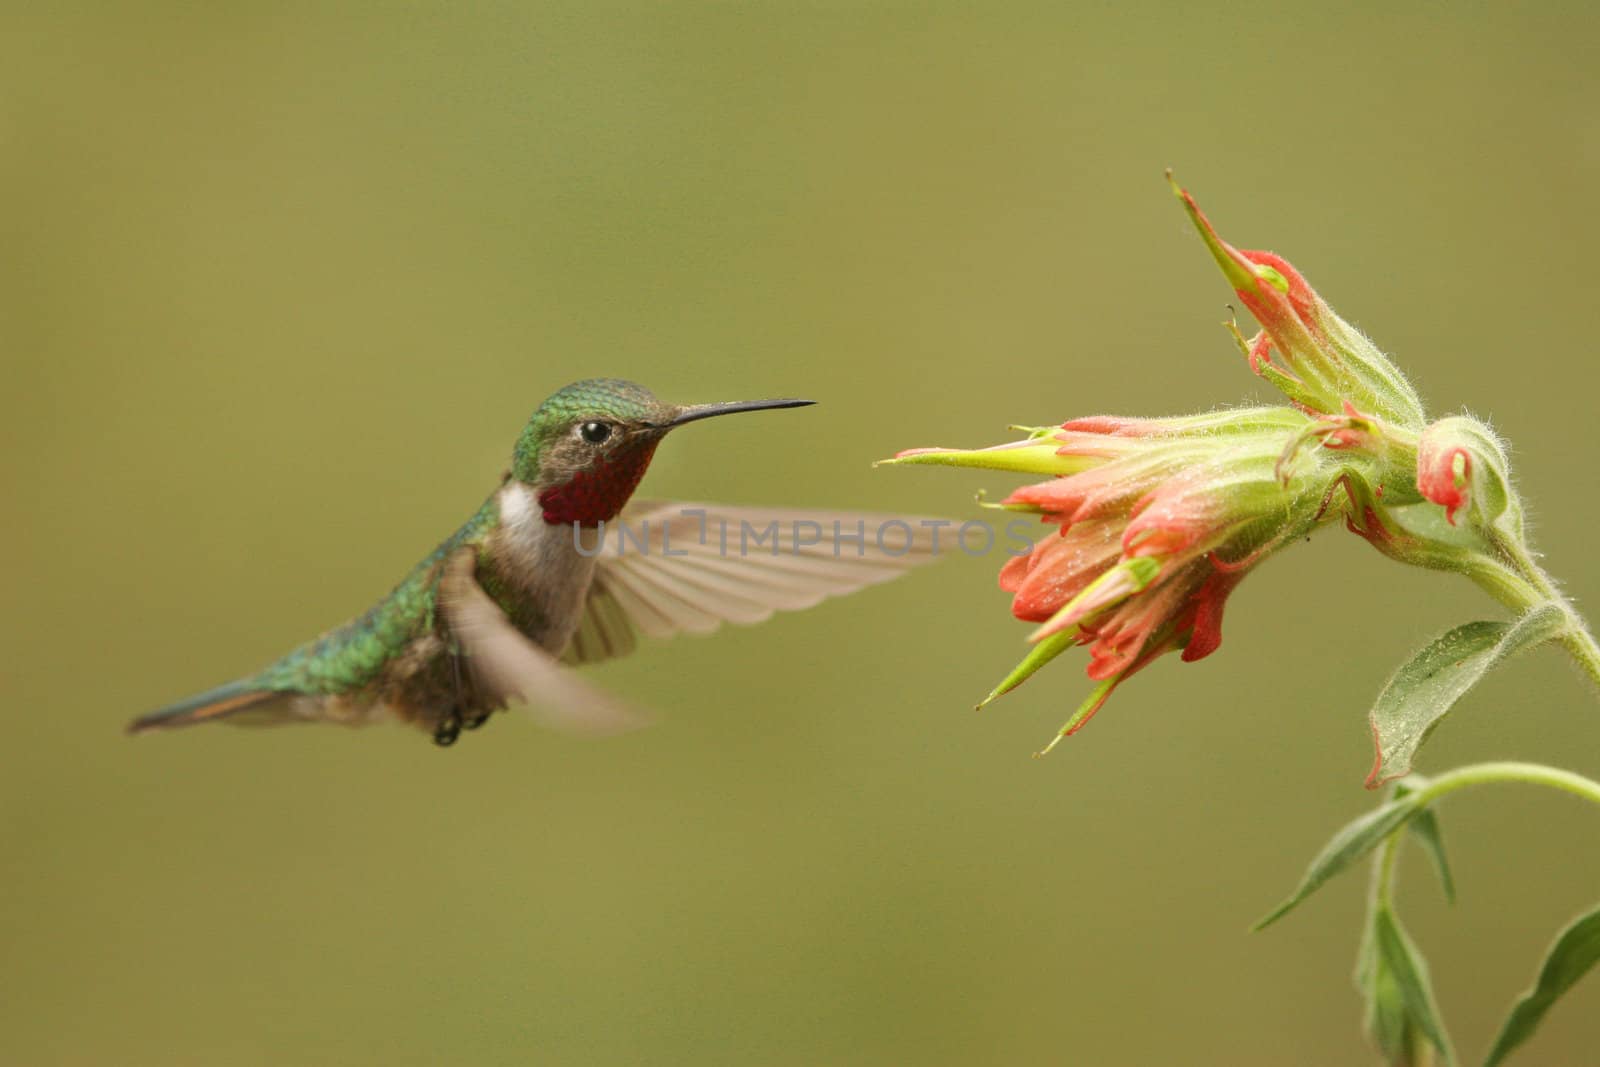 Broad-tailed hummingbird female by donya_nedomam